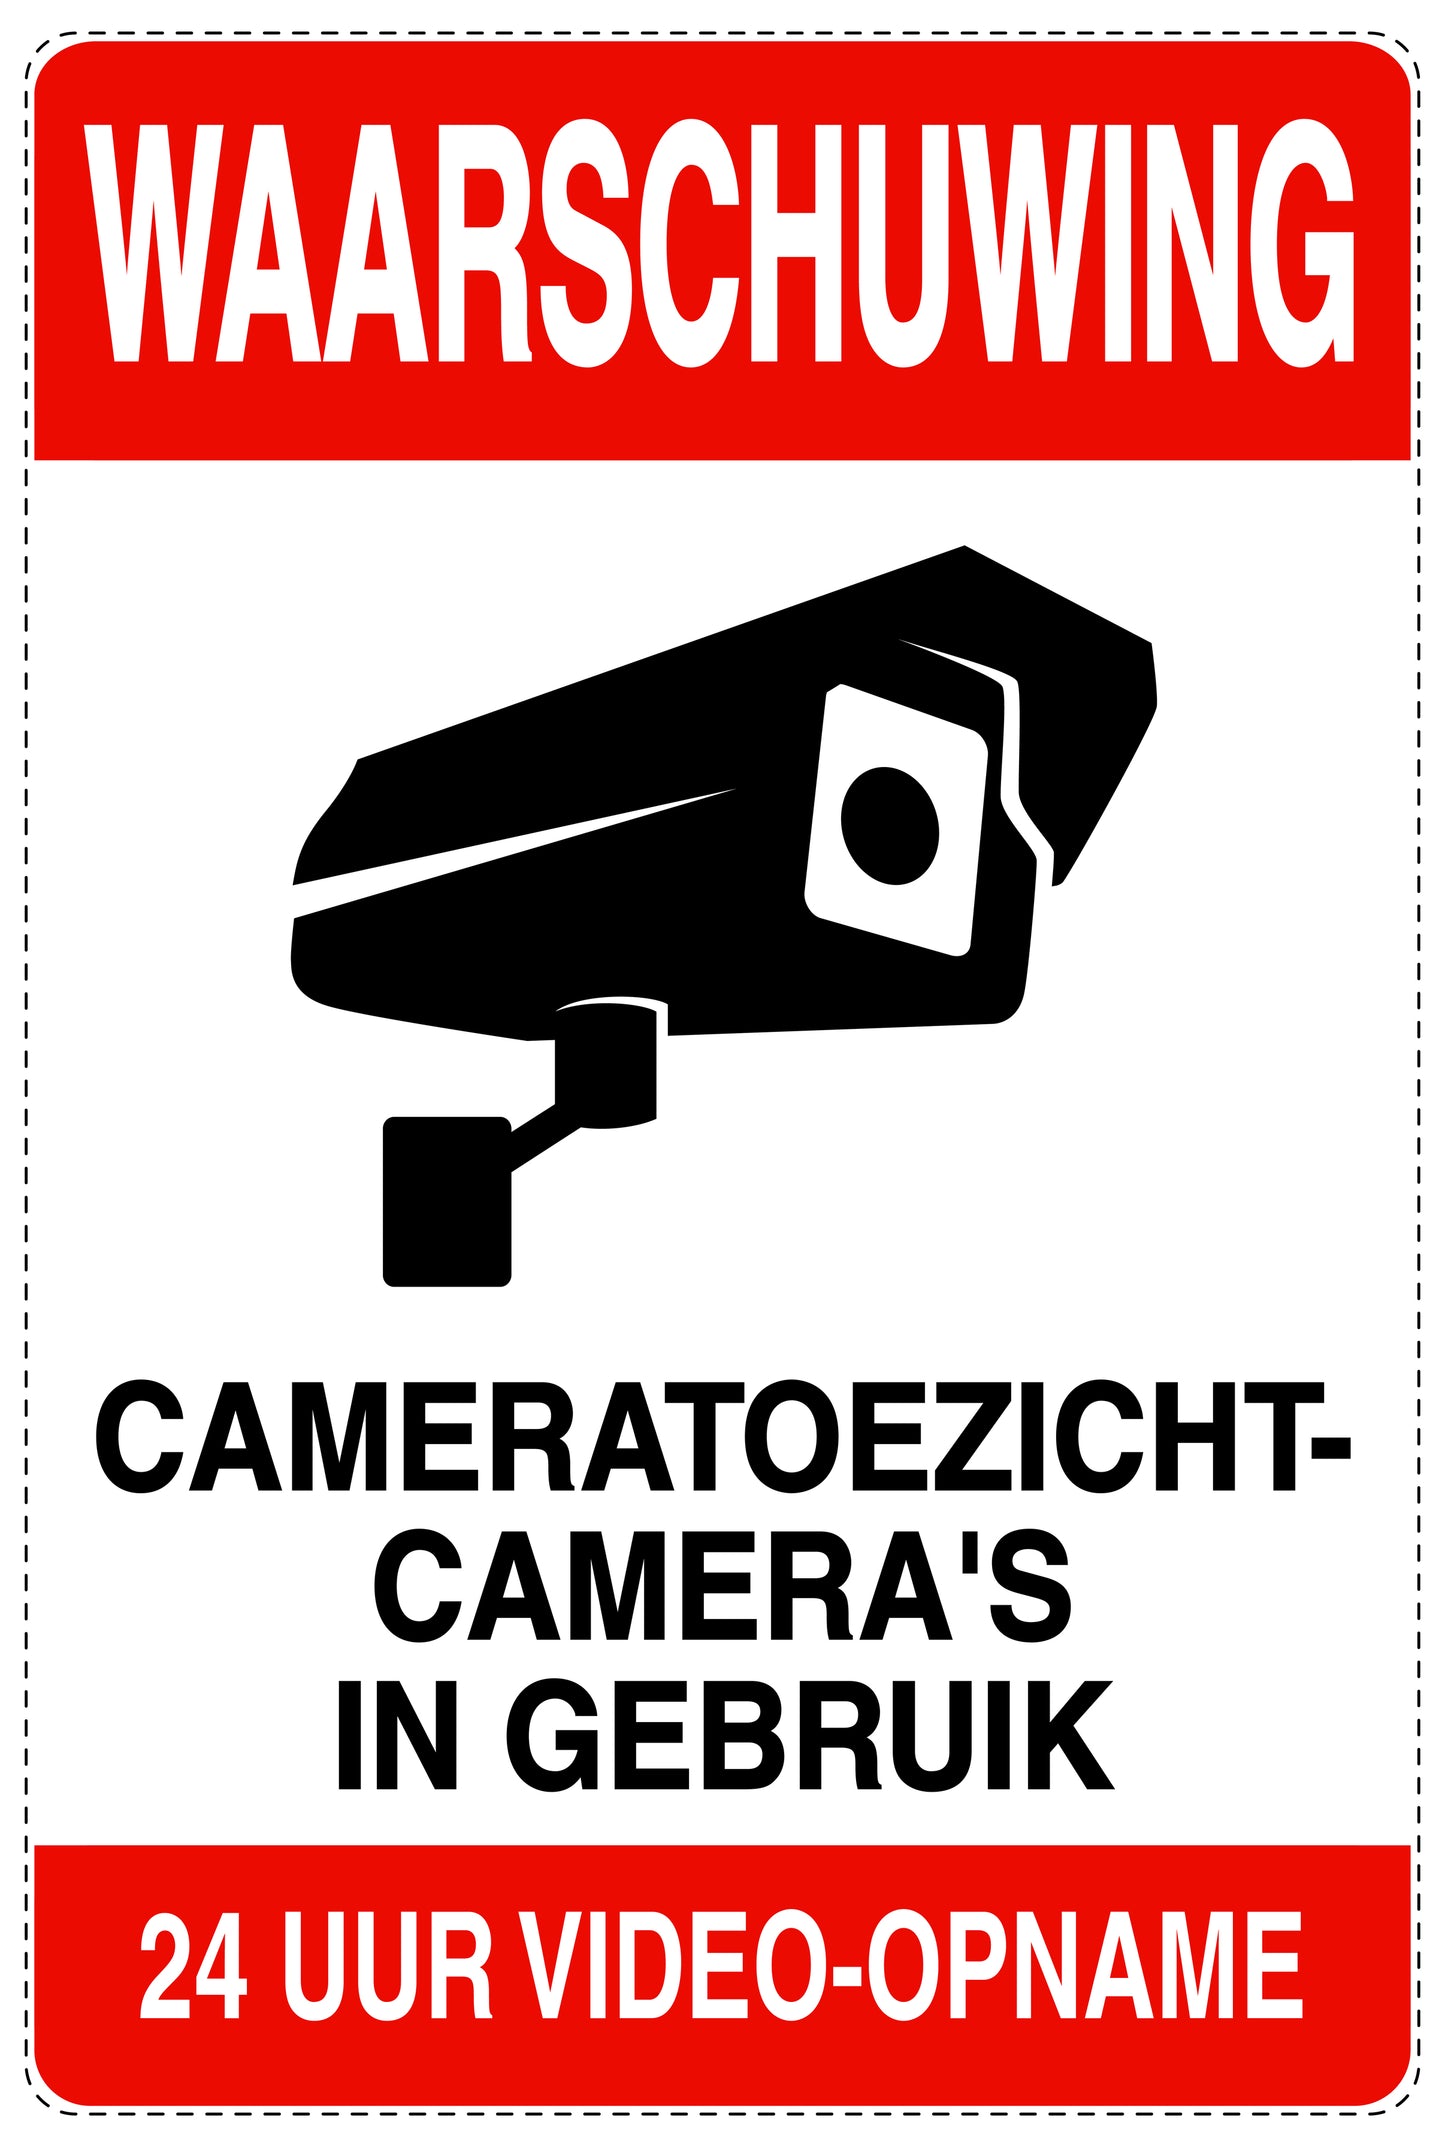 Geen toegang - videobewaking "Waarschuwing cameratoezicht camera's in gebruik 24 uur video - opname" 10-40 cm EW-RESTRICT-2220